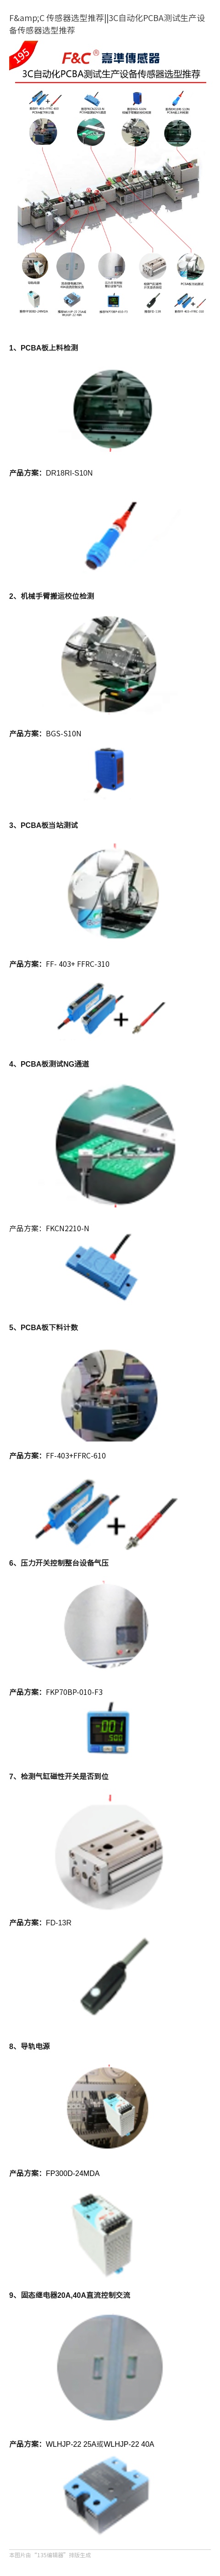 F&C 传感器选型推荐3C自动化PCBA测试生产设备传感器选型推荐.jpg